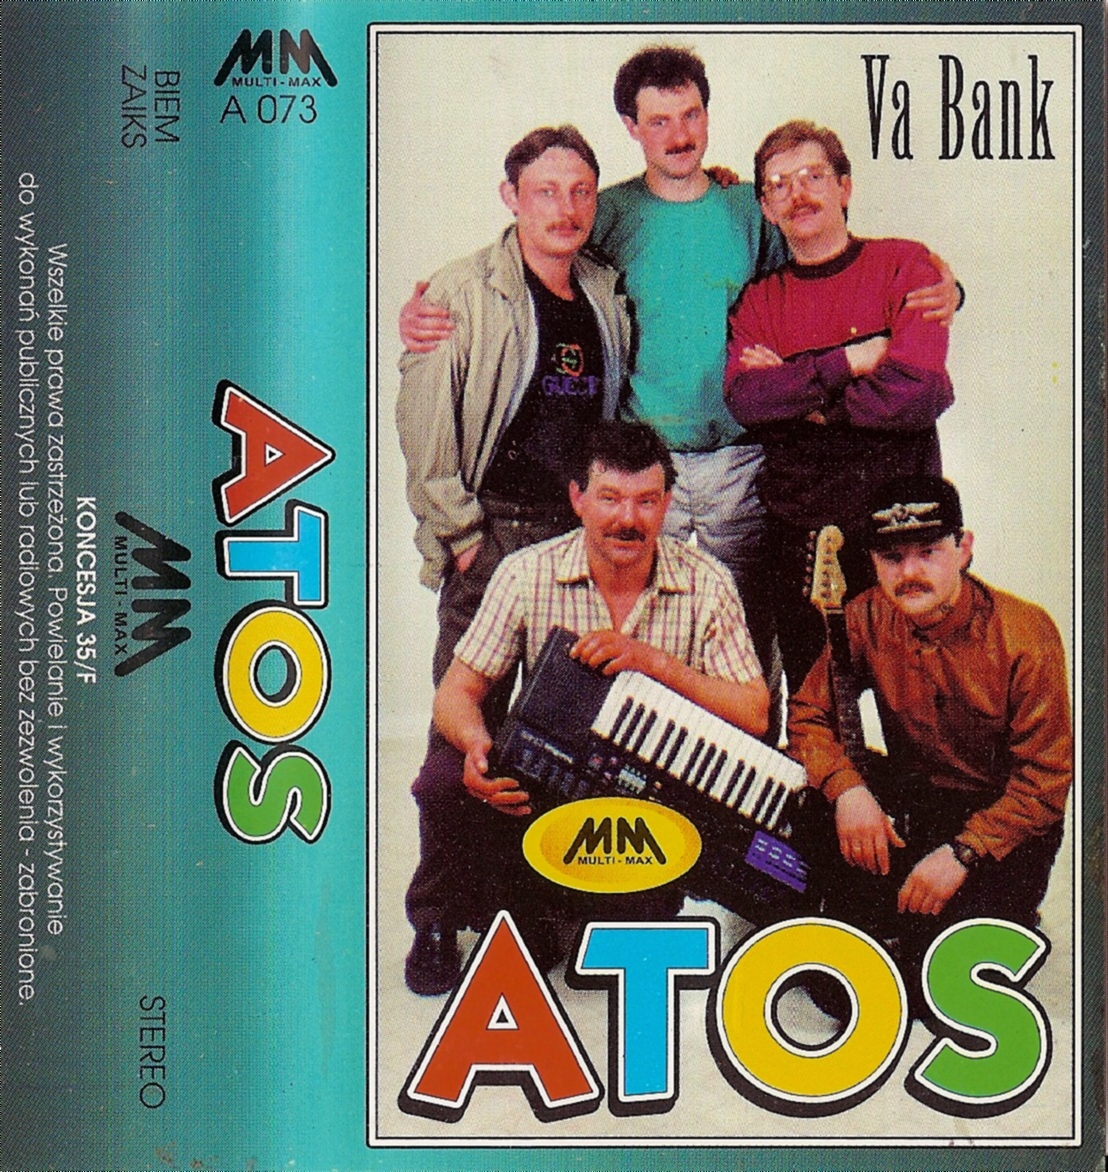 Atos - Va Bank - skanowanie1069.jpg